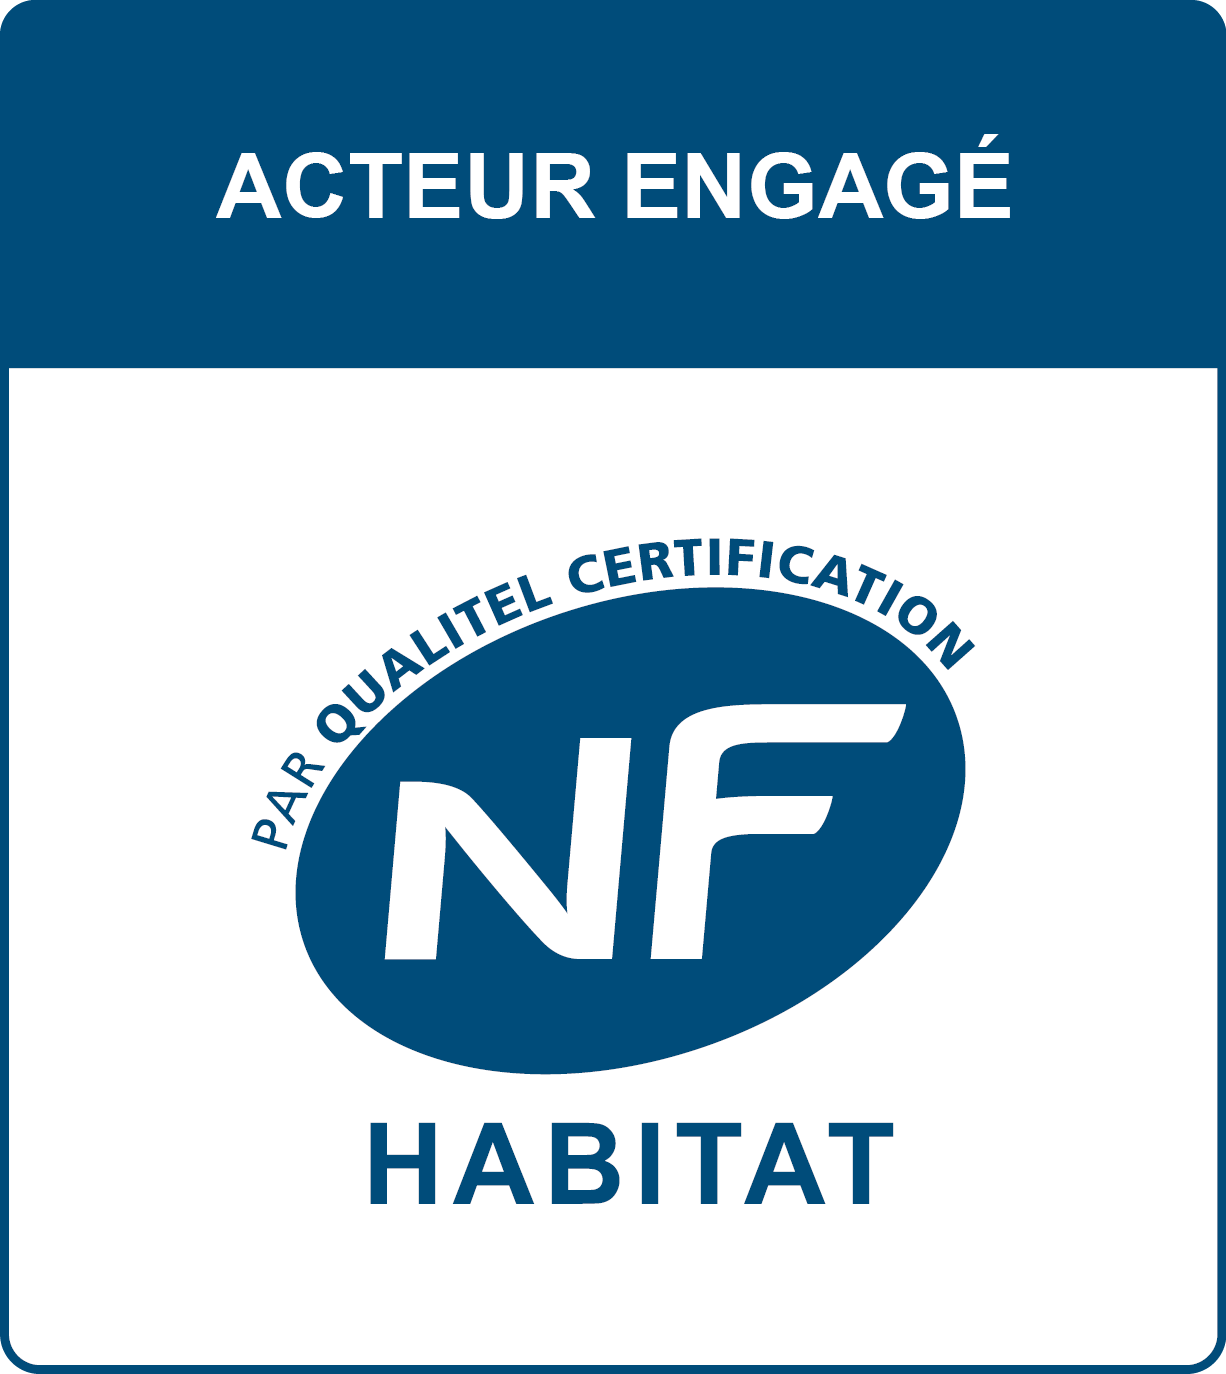 Logement neuf certifié NF Habitat